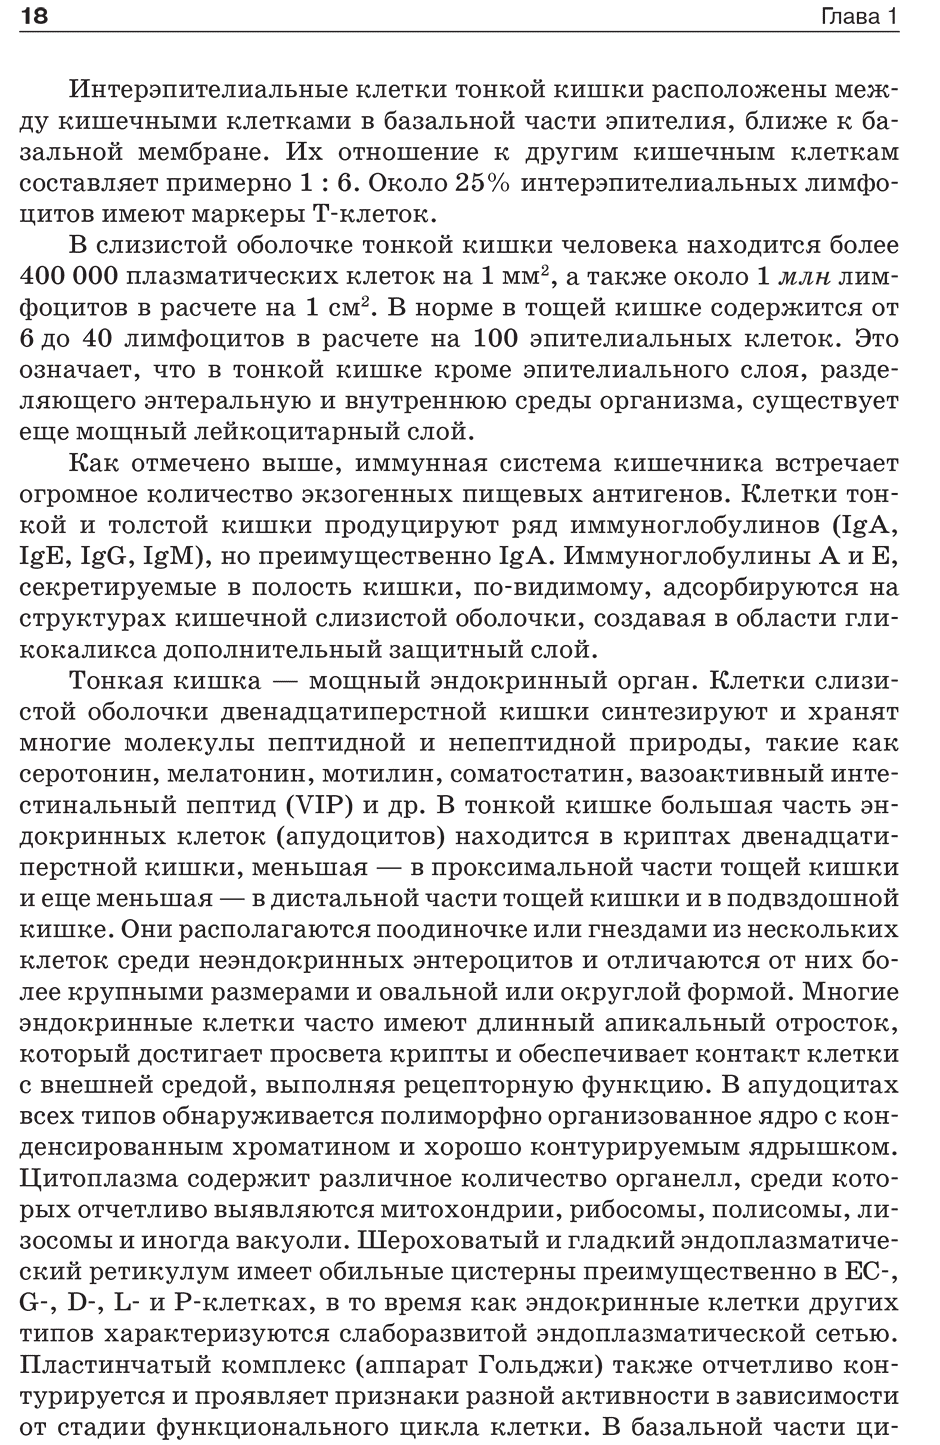 Пример страницы из книги "Болезни кишечника" - А. А. Свистунов